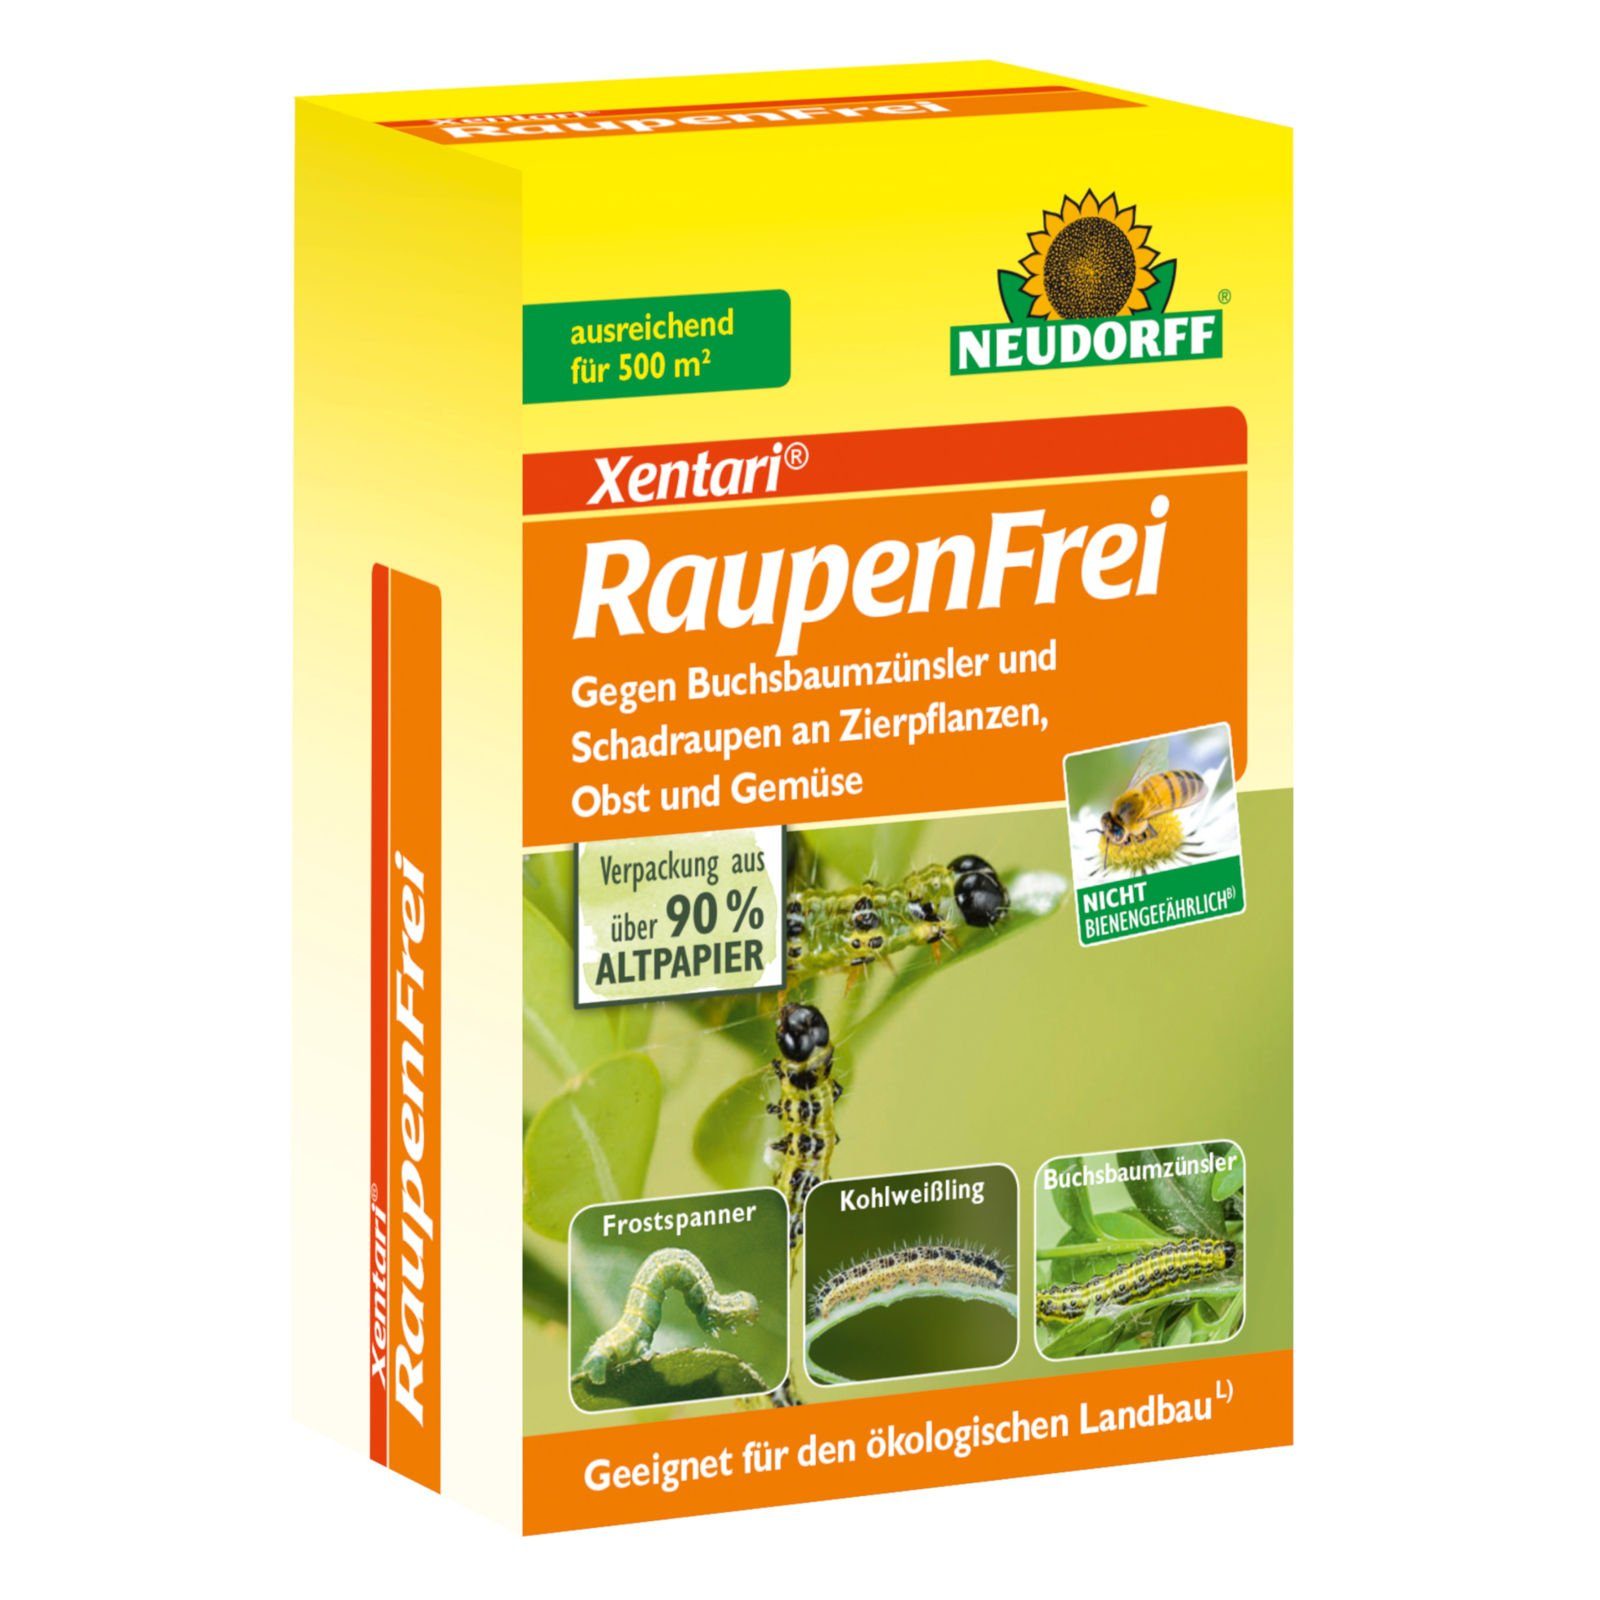 Raupenfrei XenTari g - 4x Insektenvernichtungsmittel 25 Neudorff